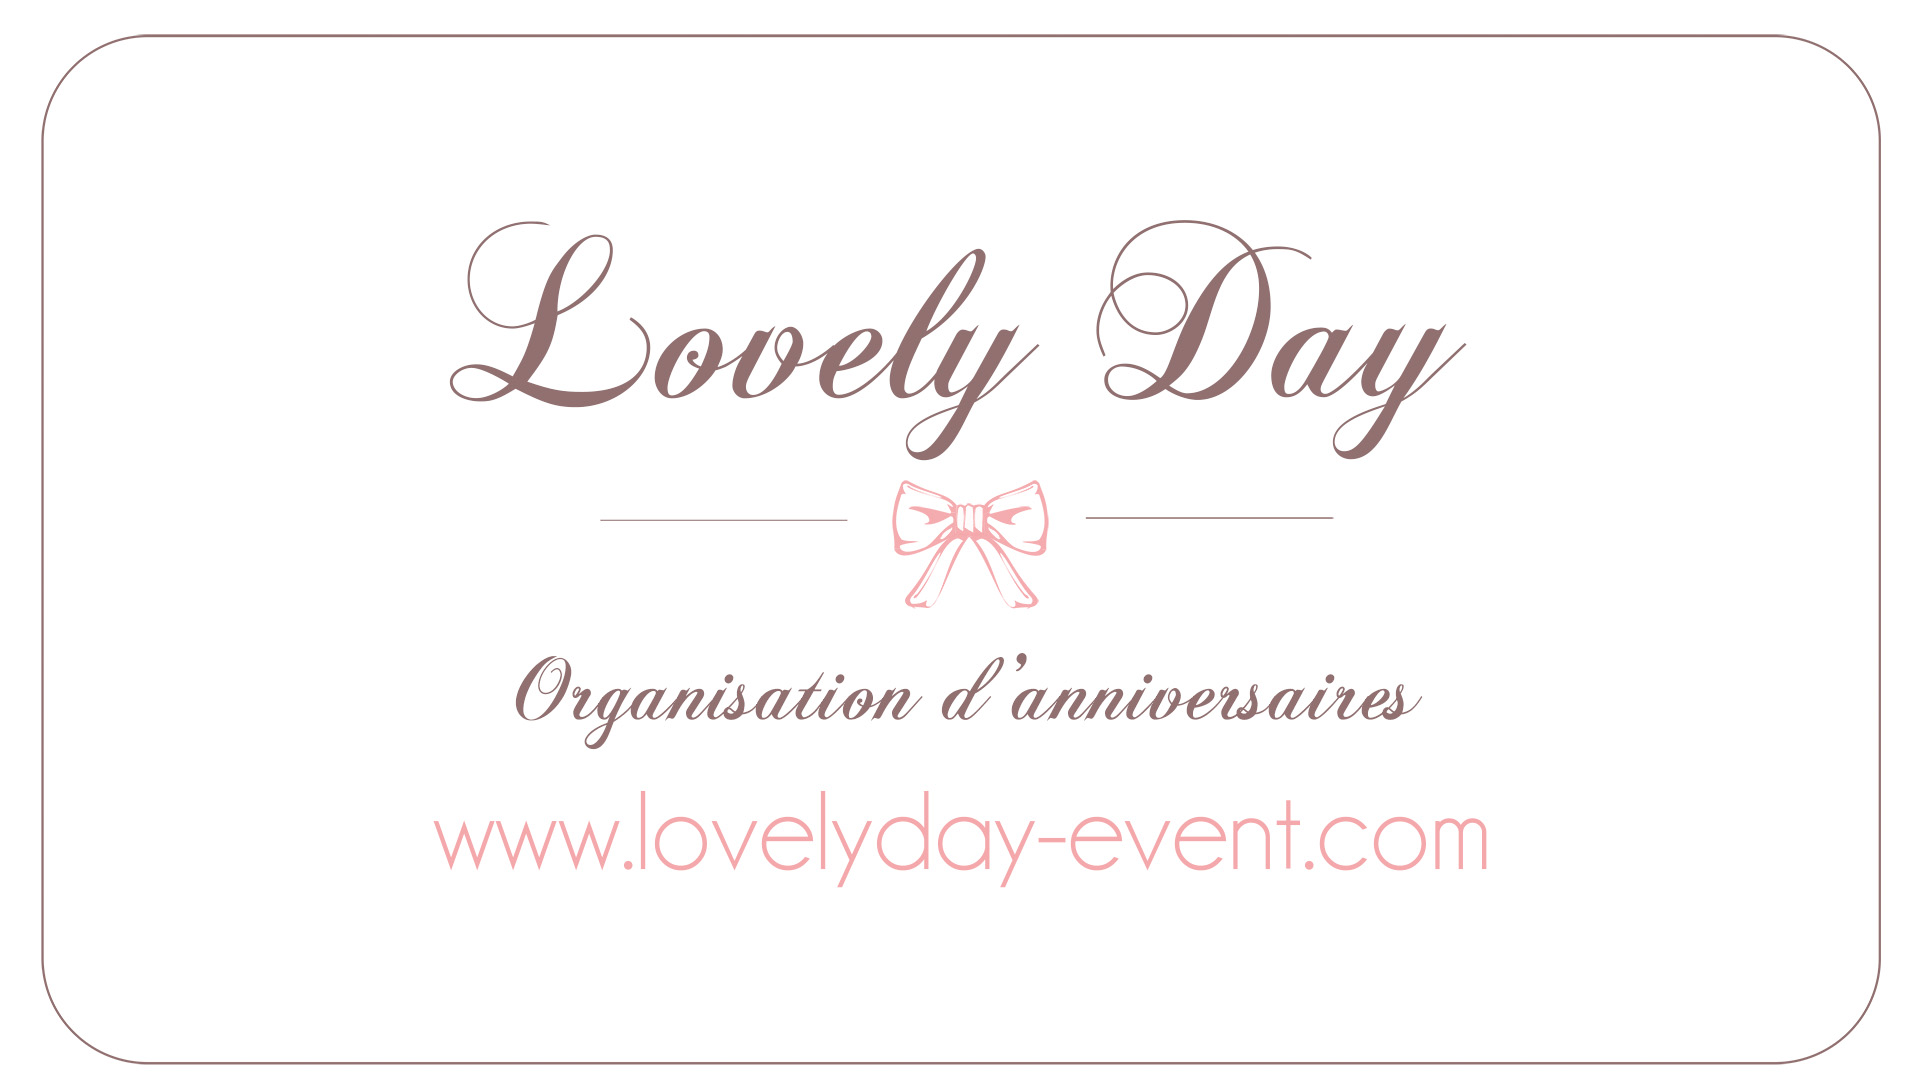 Lovely day – Organisation d’anniversaires